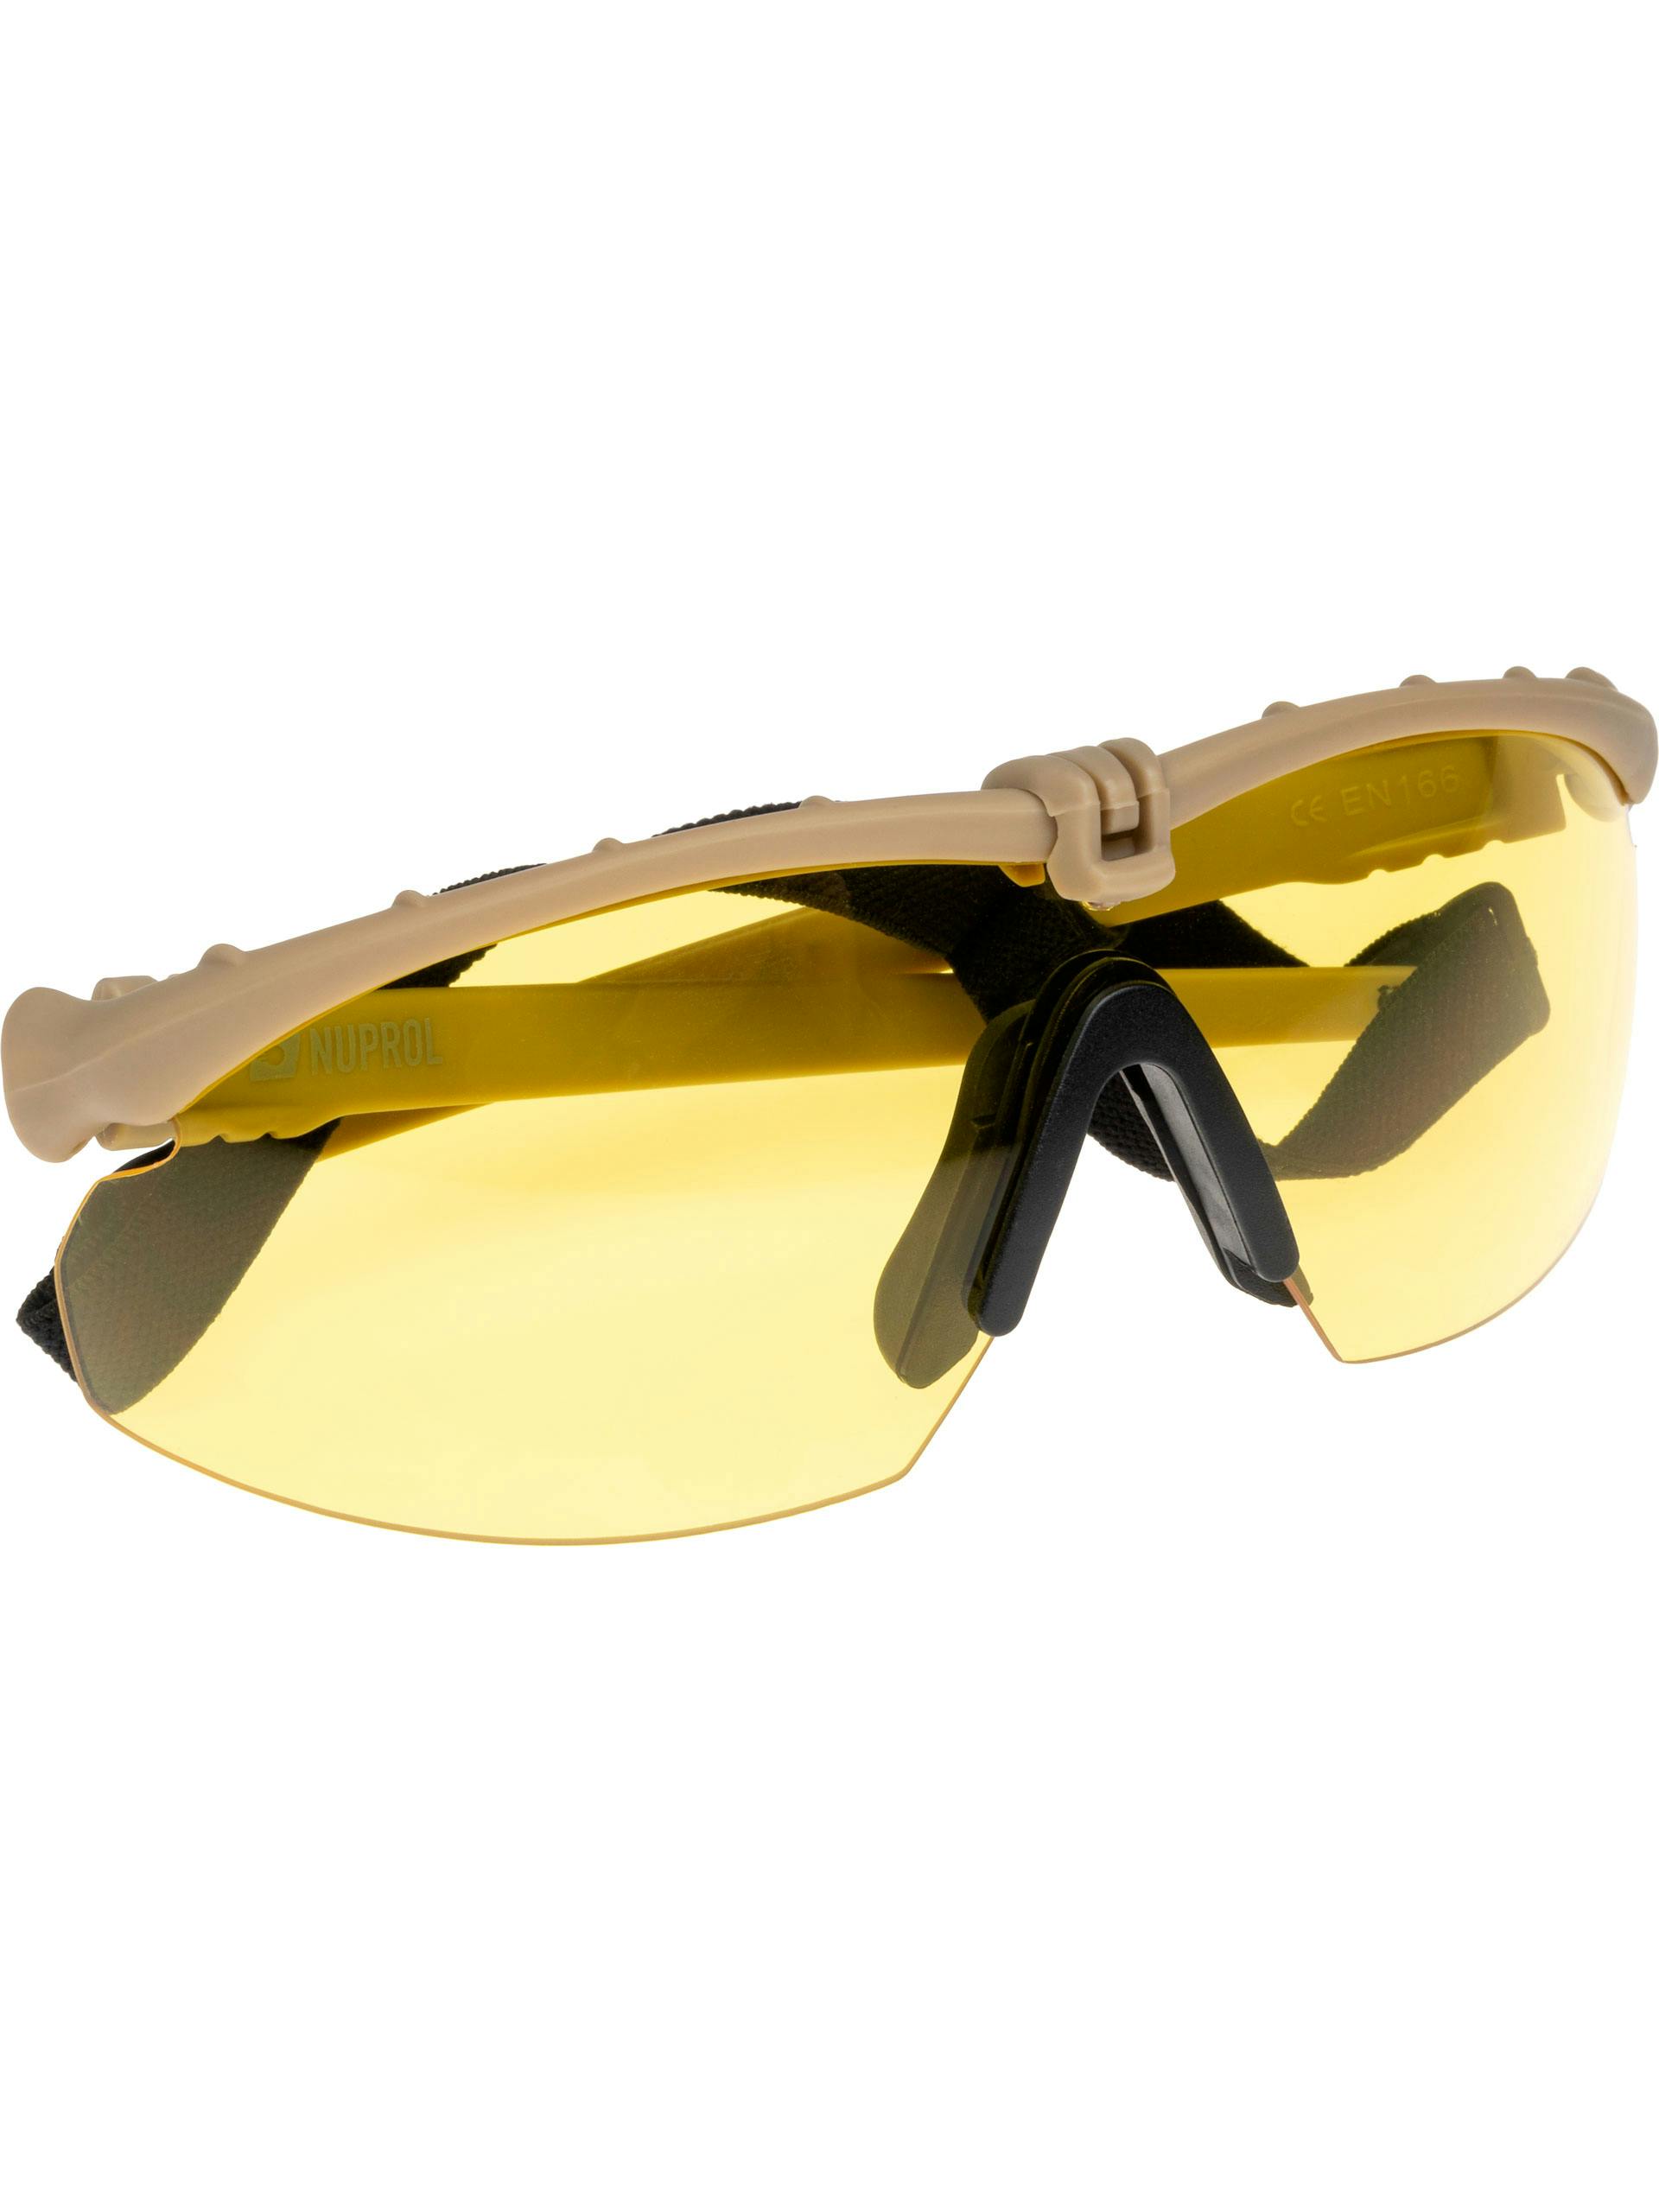 Nuprol Battle Pro Protective Airsoft Eyewear Black Frame Free UK Delivery 